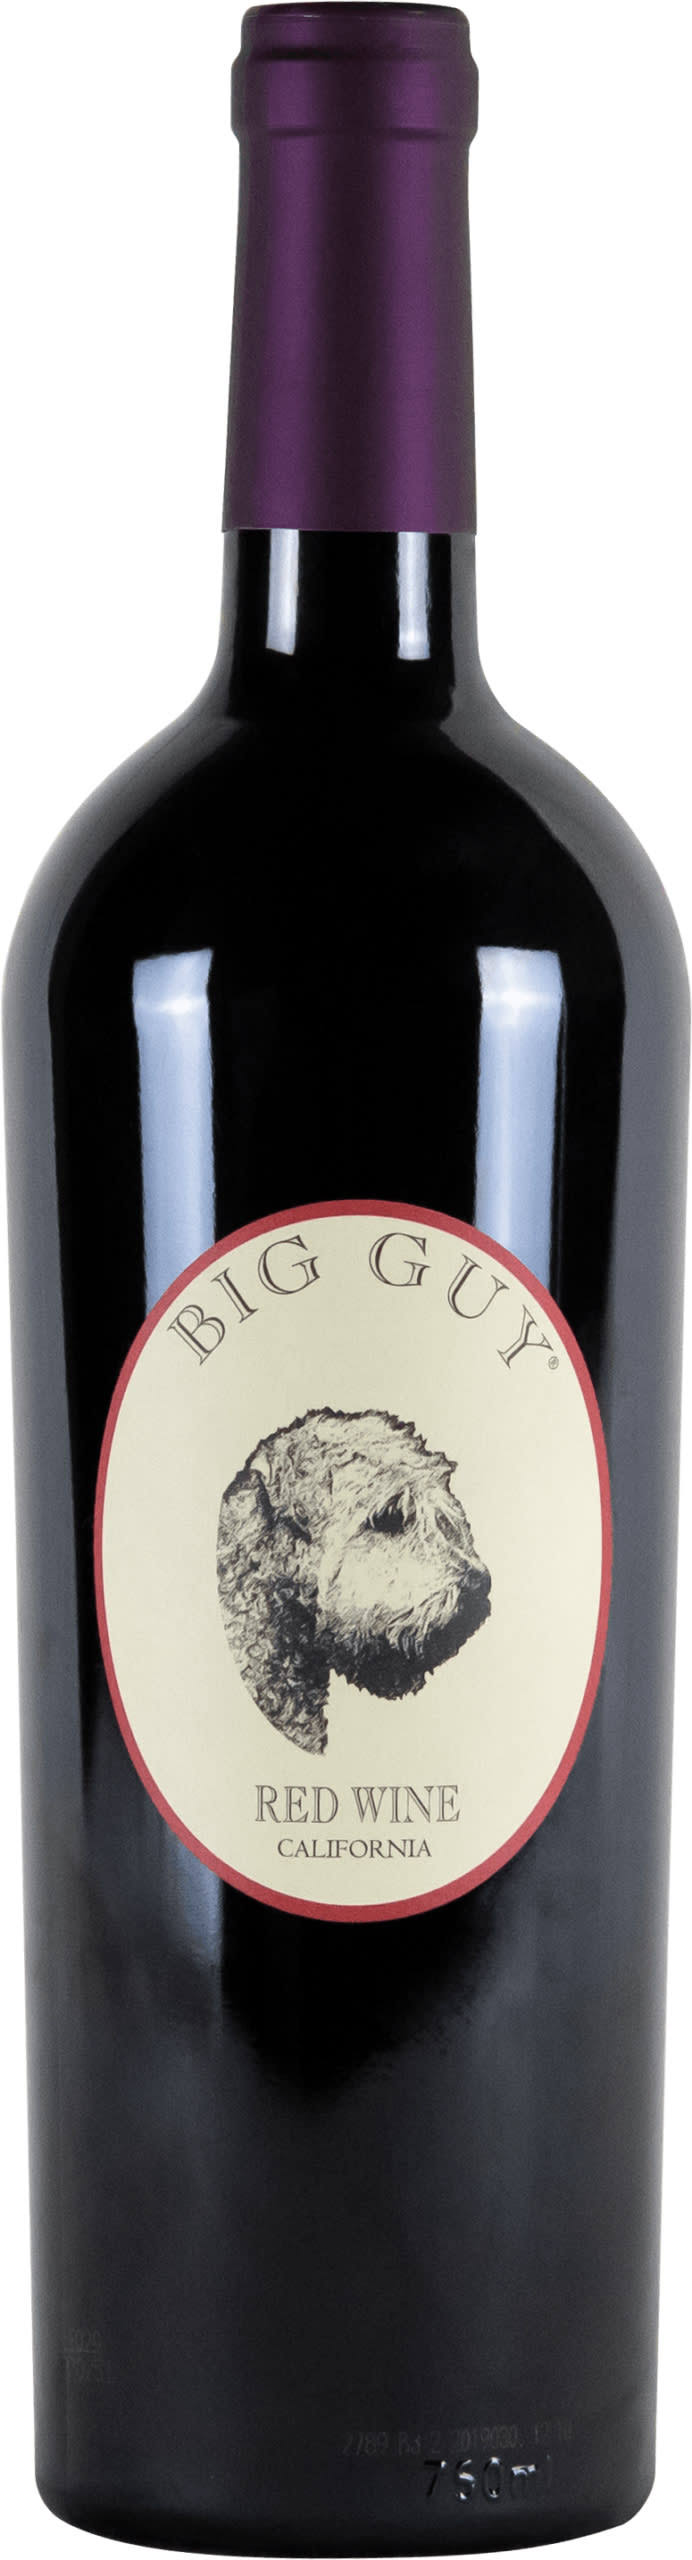 Big Guy Red Wine, California, 2015 - 750 ml